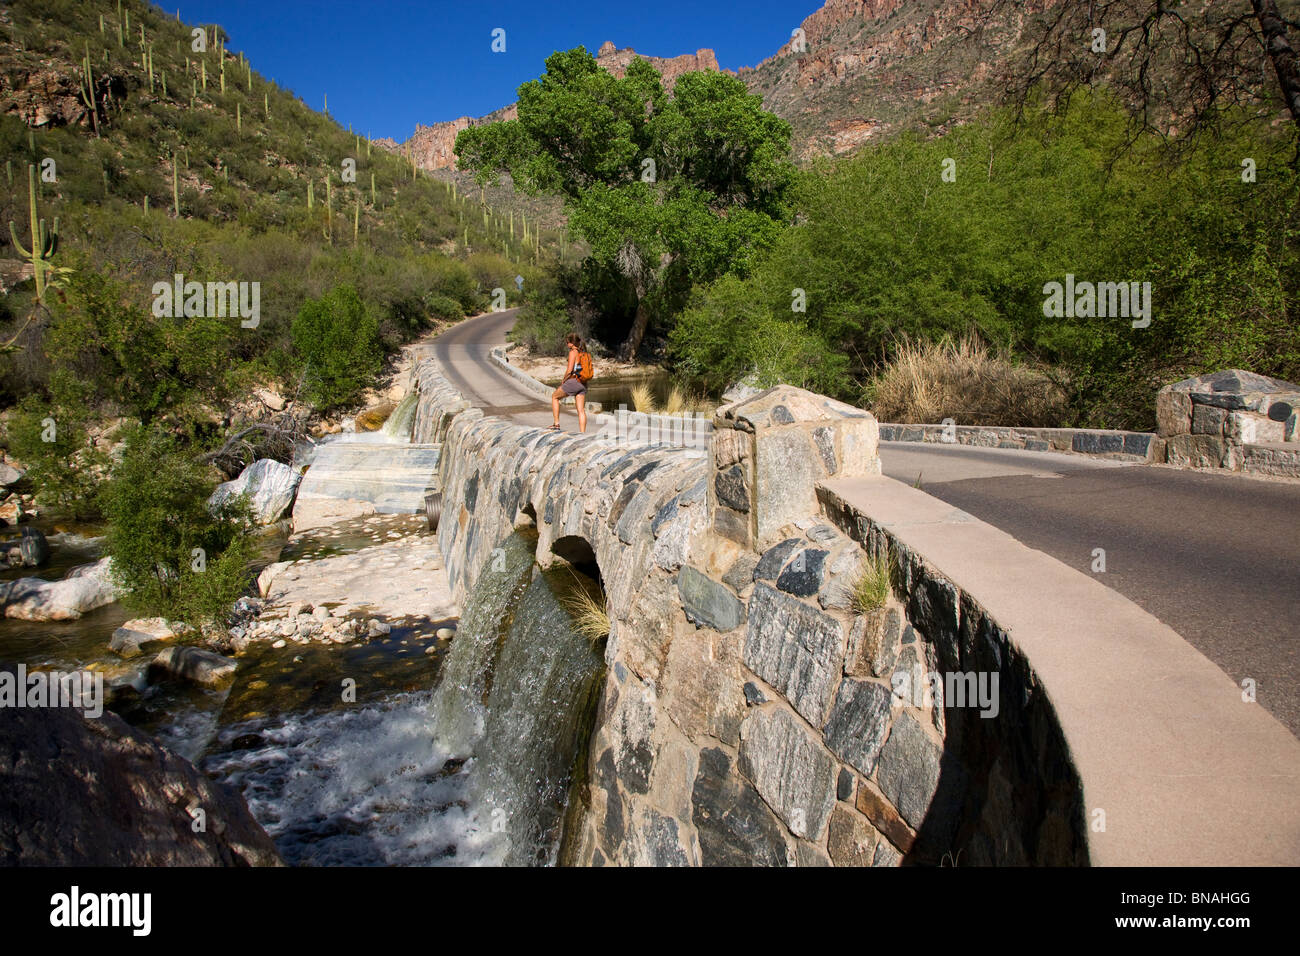 Hiker stops at Sabino Creek, Sabino Canyon Recreation Area, Tucson, Arizona. (model released) Stock Photo